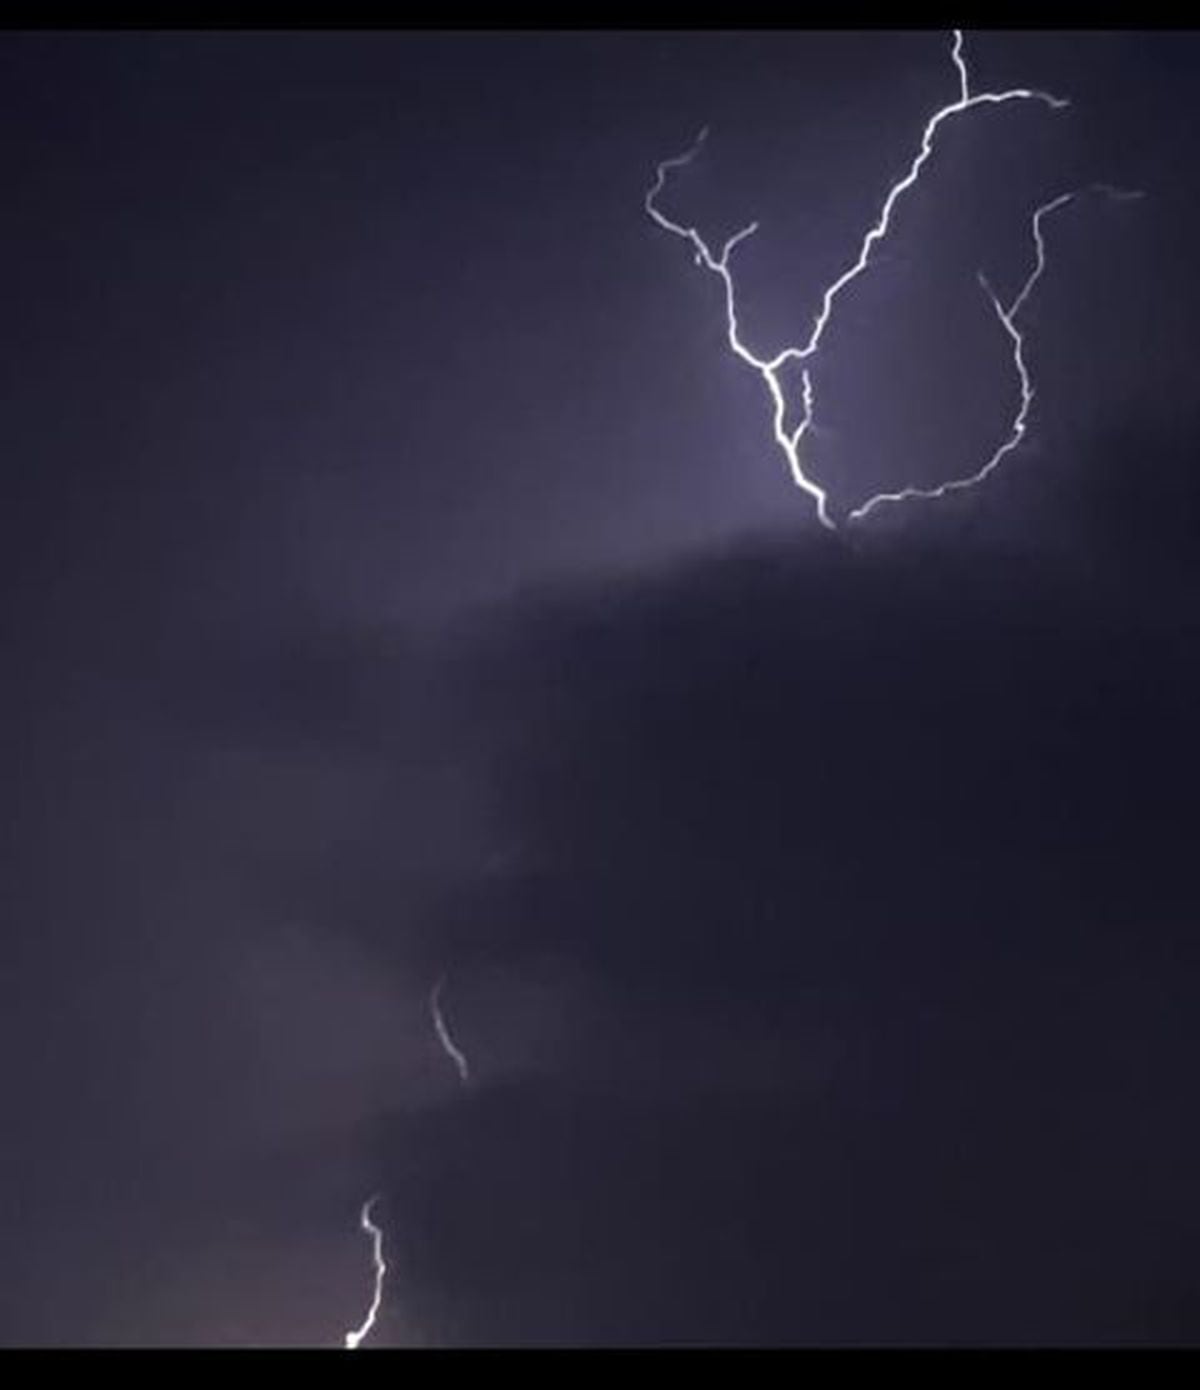 Lightning seen in Dovecotes, Wolverhampton by Tasha Washa